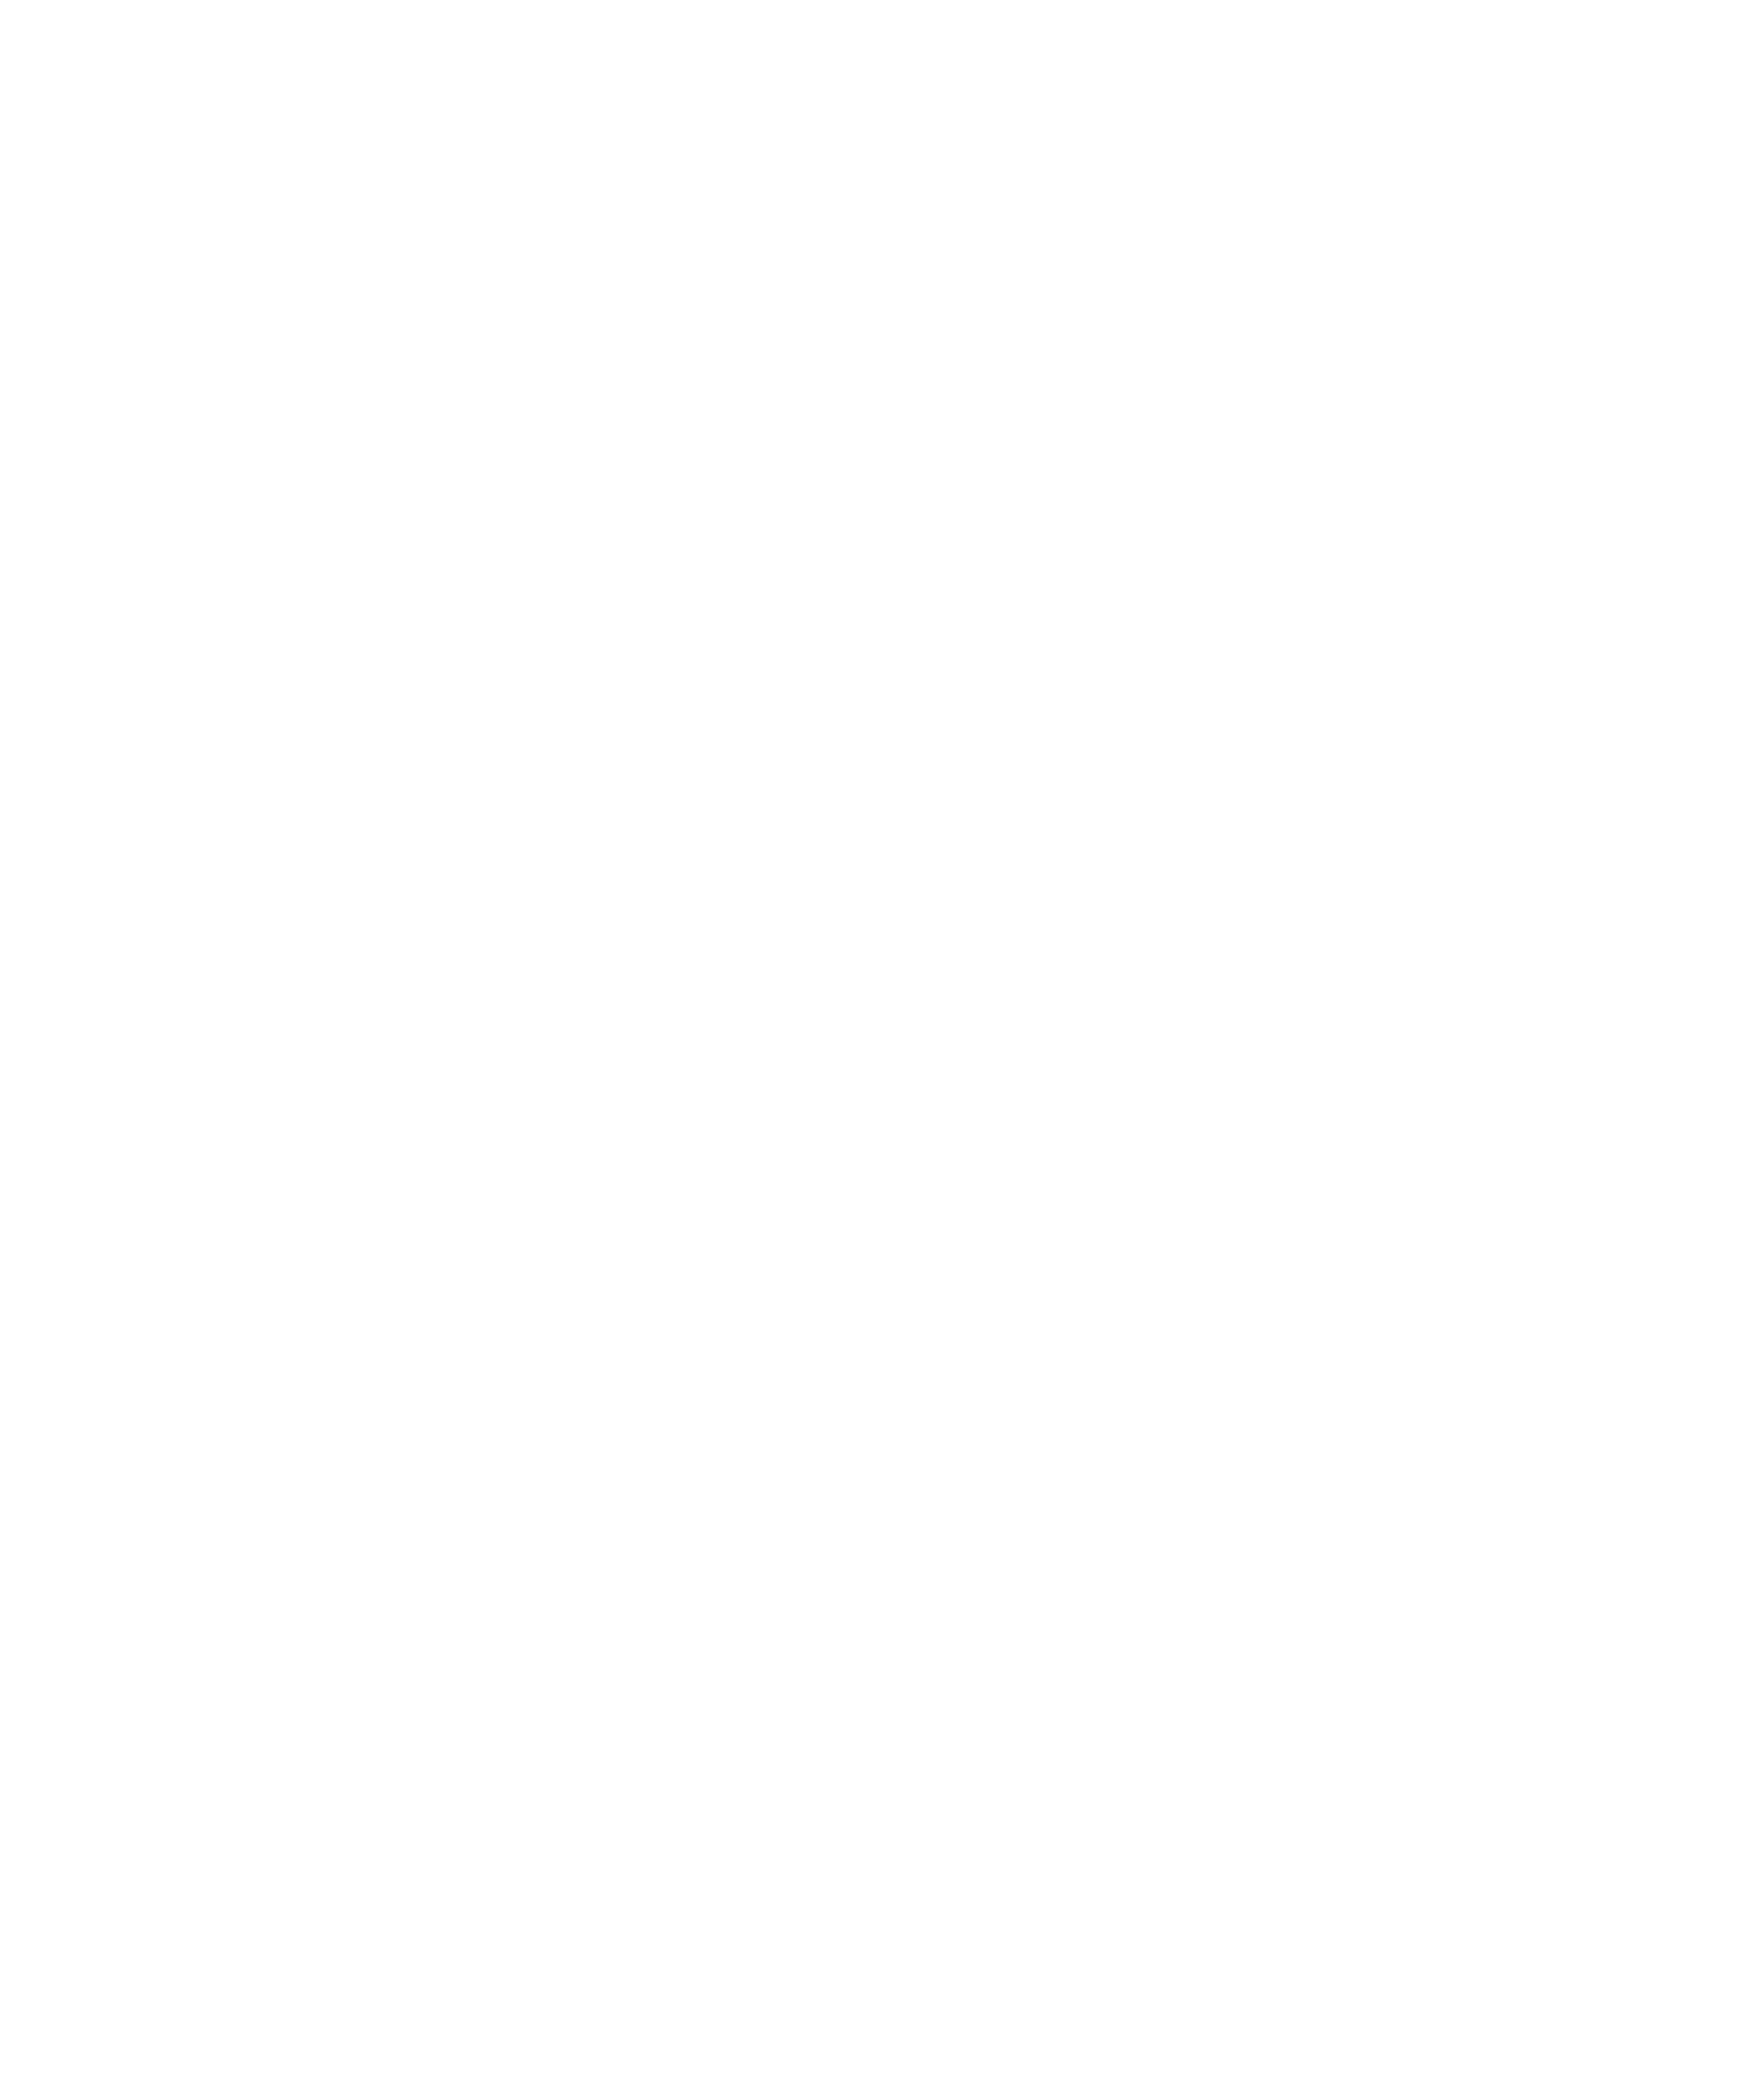 M Resort Travellers choice 2020 RESACON vegas hotel